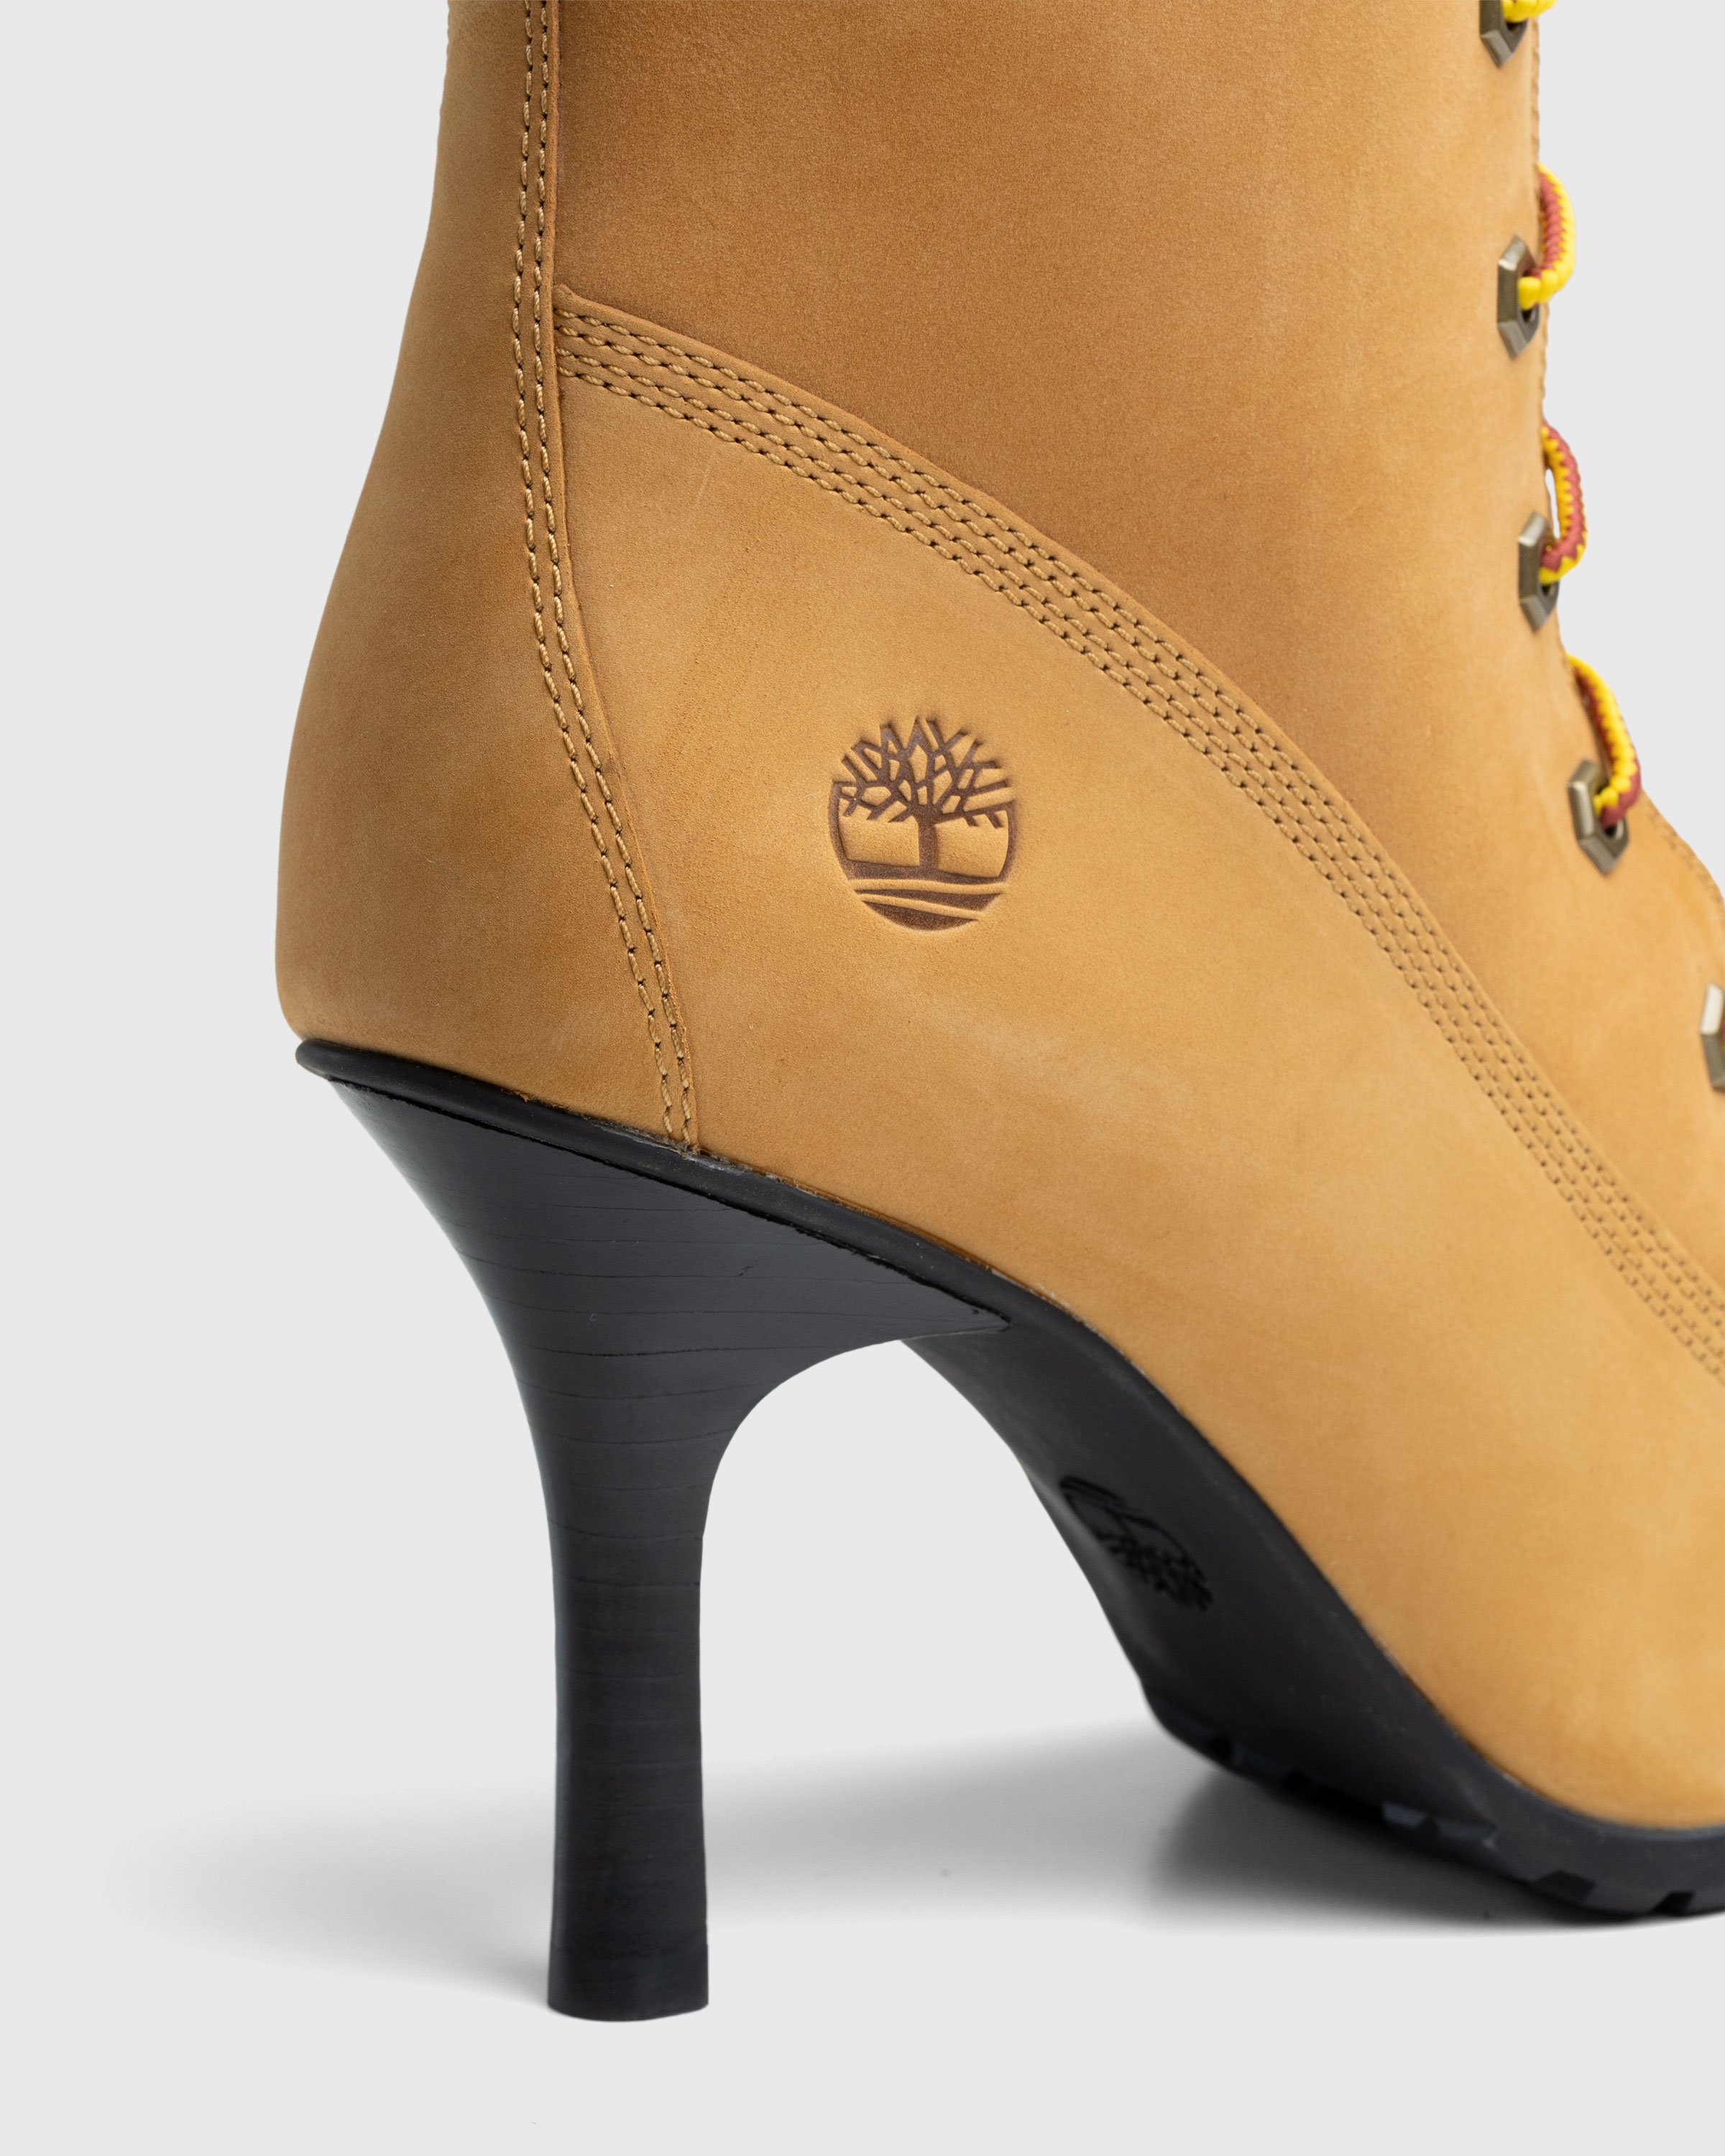 Veneda Carter x Timberland - Tall Lace Boot Yellow - Footwear - Brown - Image 4